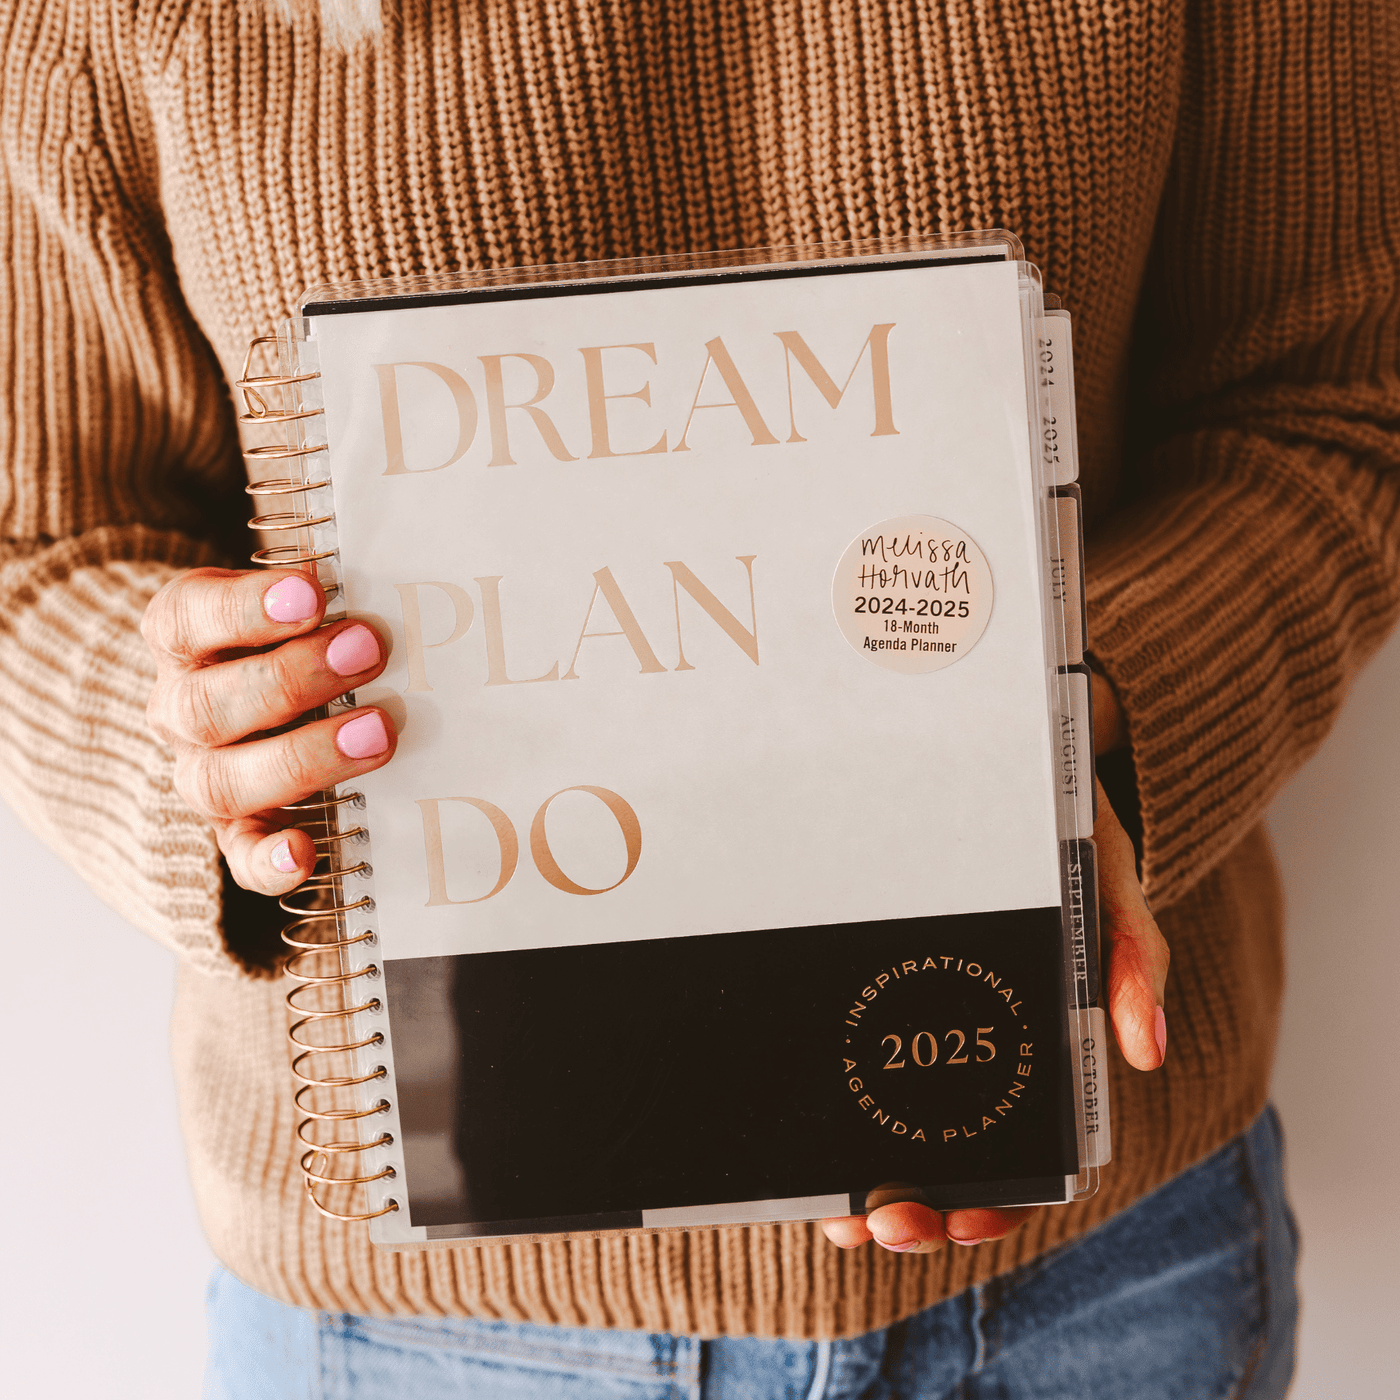 Dream Plan Do 2024-2025 18 Month Planner - Sweet Water Decor - Notebooks